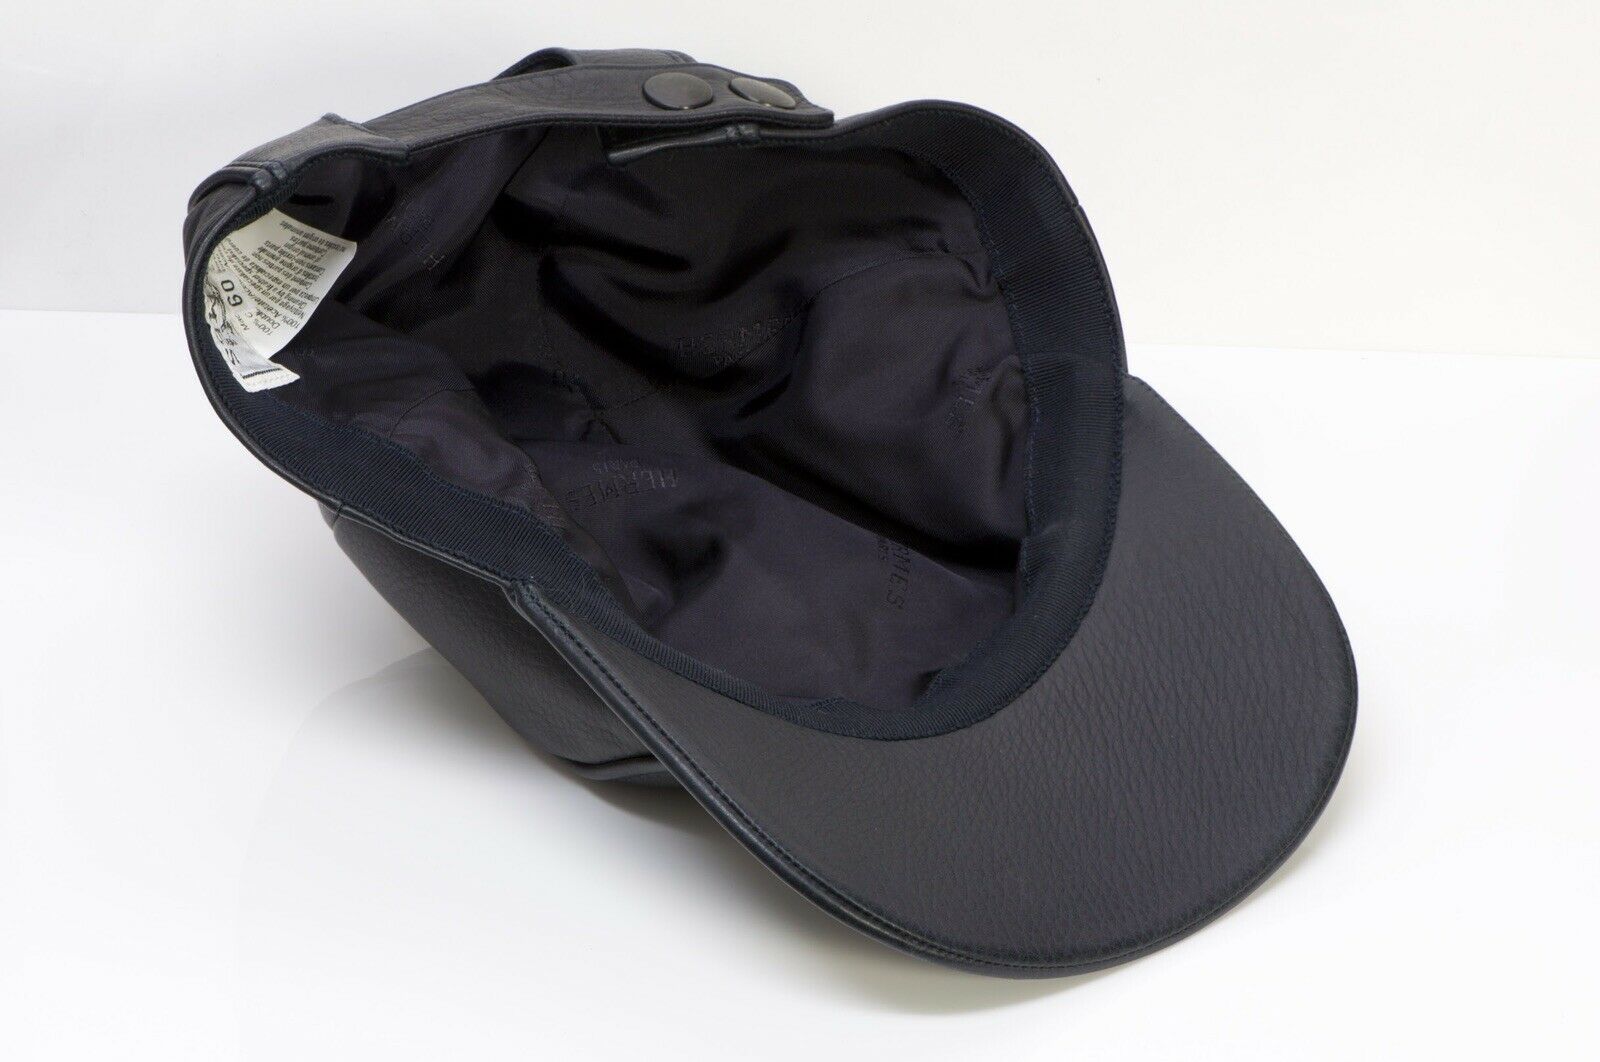 HERMES Paris Dark Navy Blue Leather Men’s Cap Hat